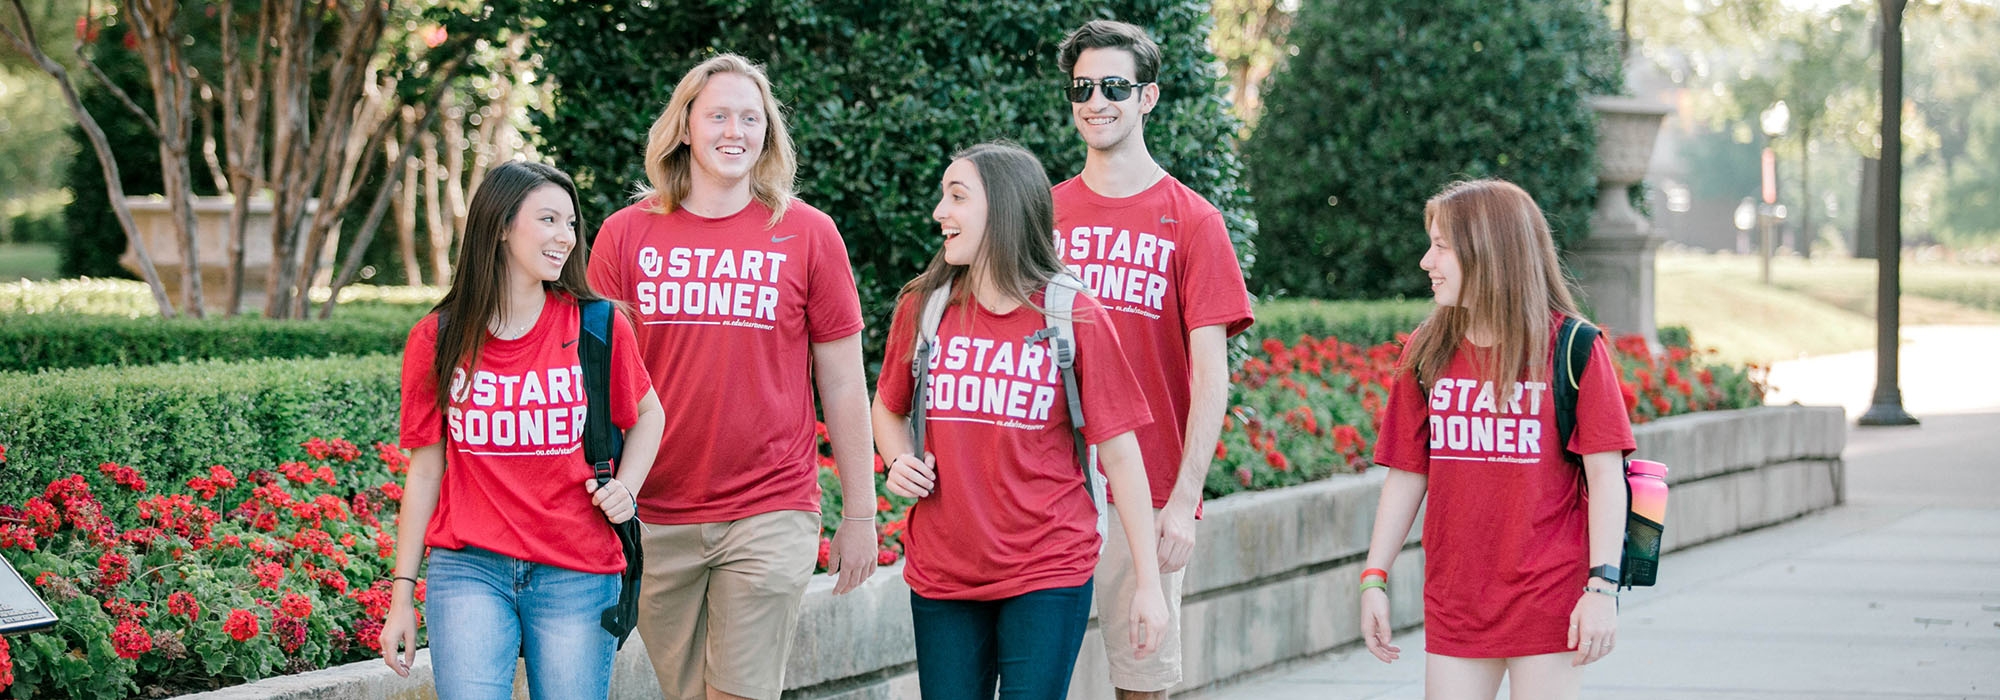 Start Sooner students walking on campus at the University of Oklahoma.